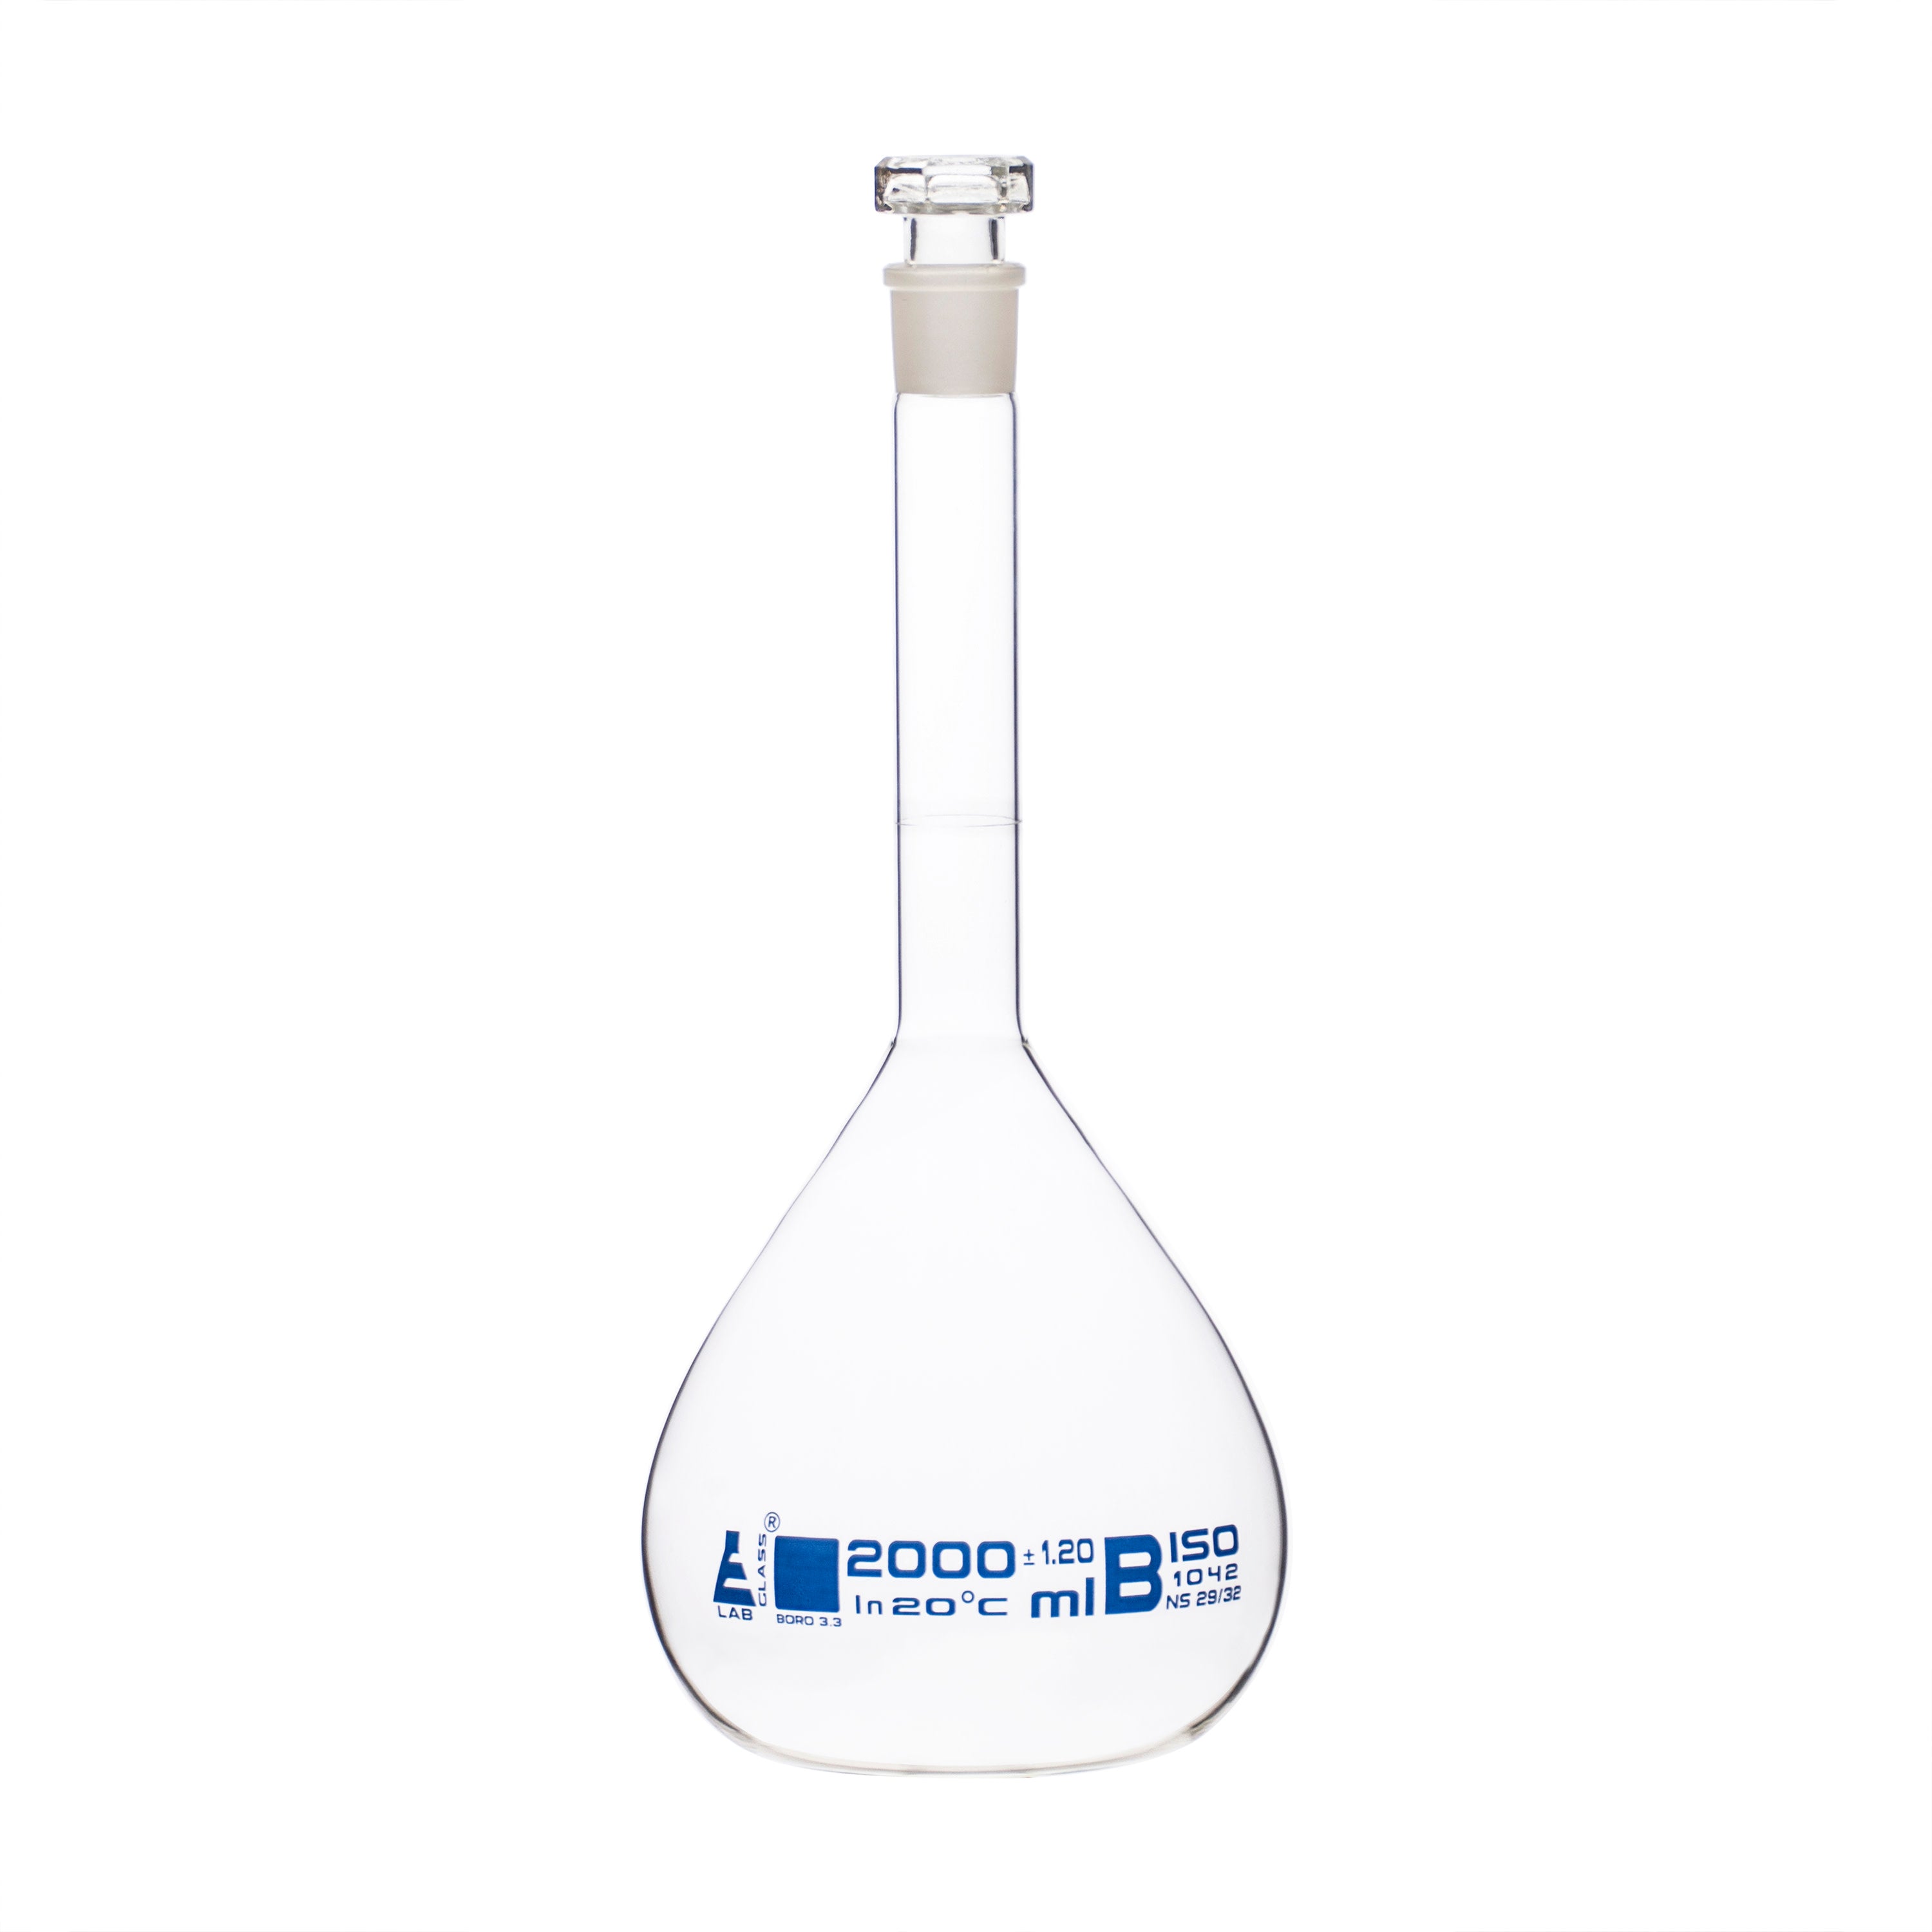 Borosilicate Volumetric Flask with Hollow Glass Stopper, 2000ml, Class B, Blue Print, Autoclavable